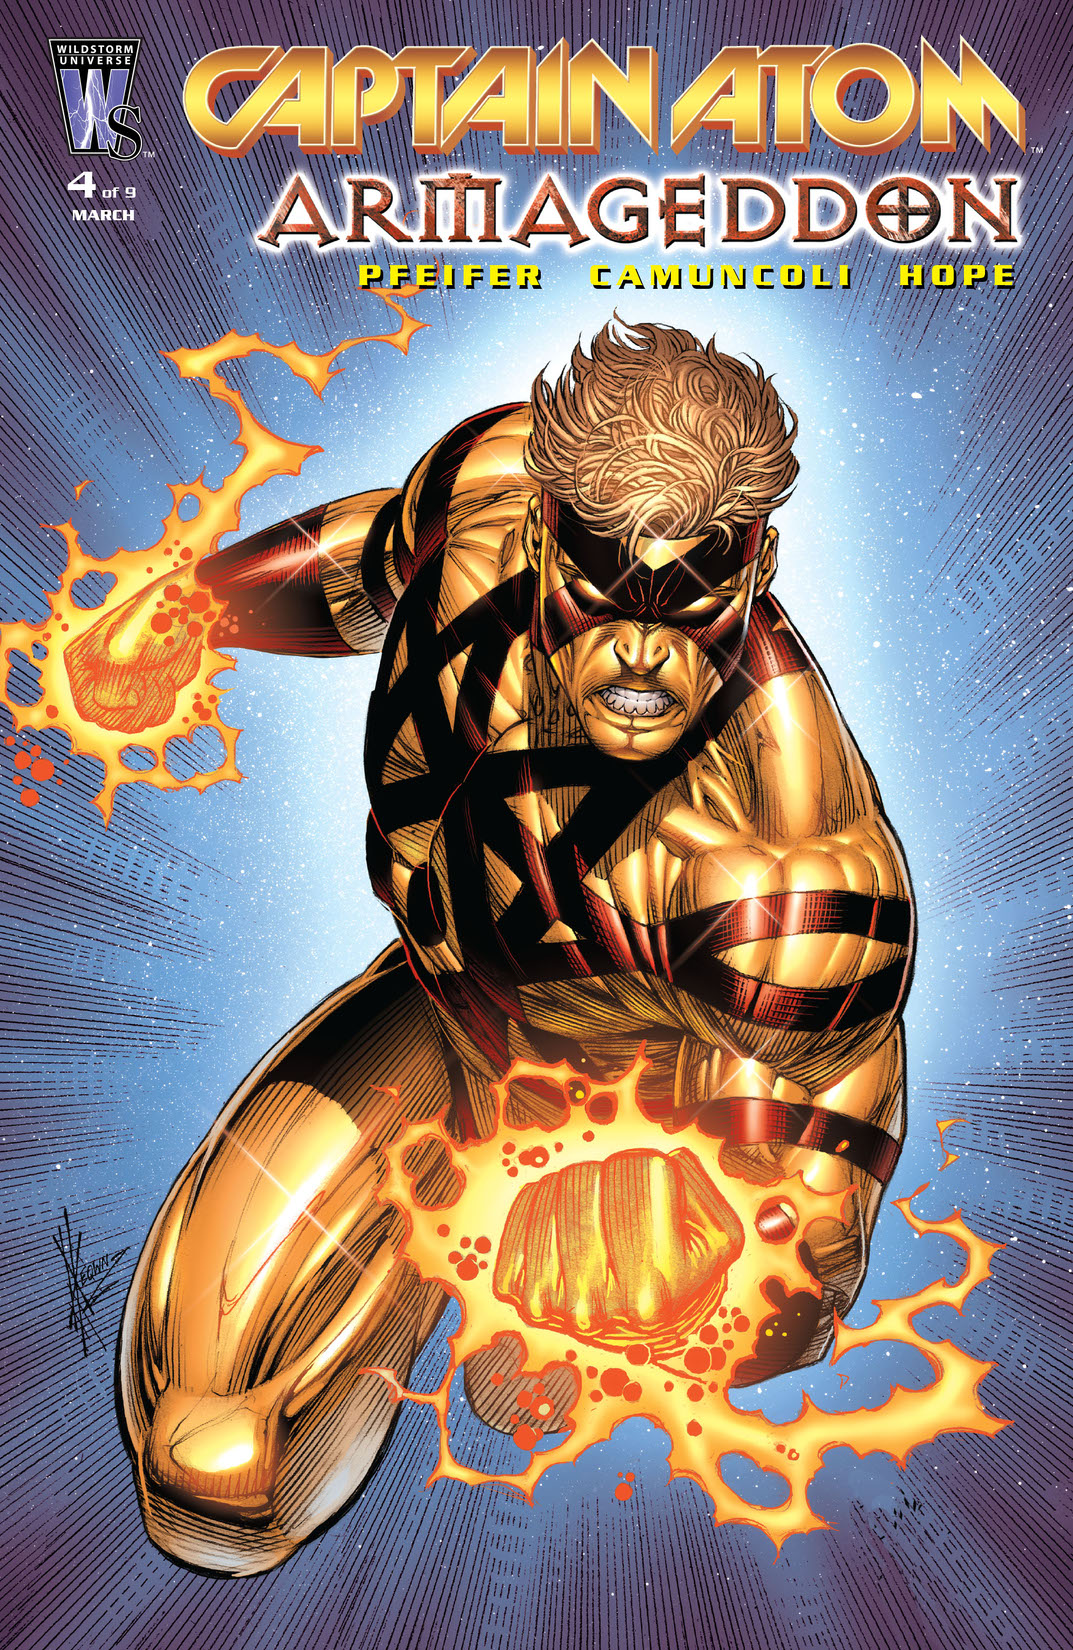 Captain Atom: Armageddon #4 preview images